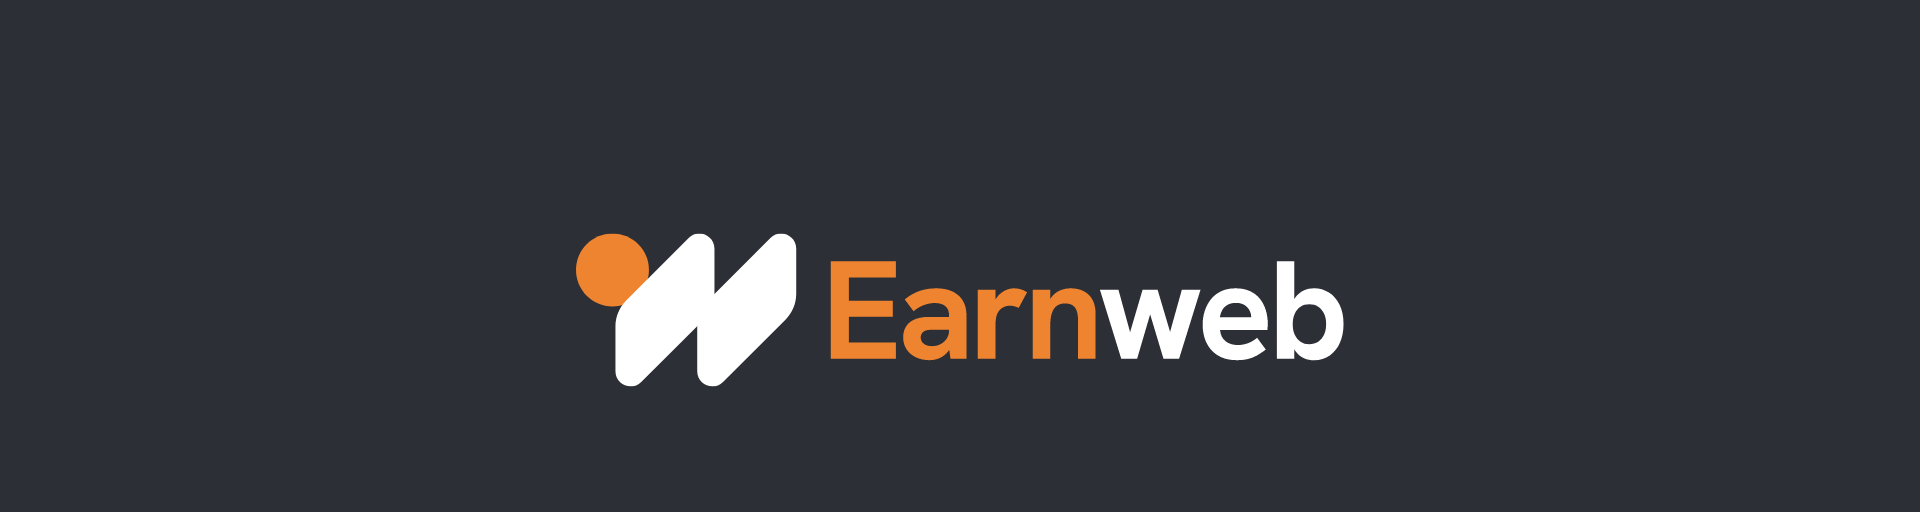 Earnweb Steam Wallet 10$ bg